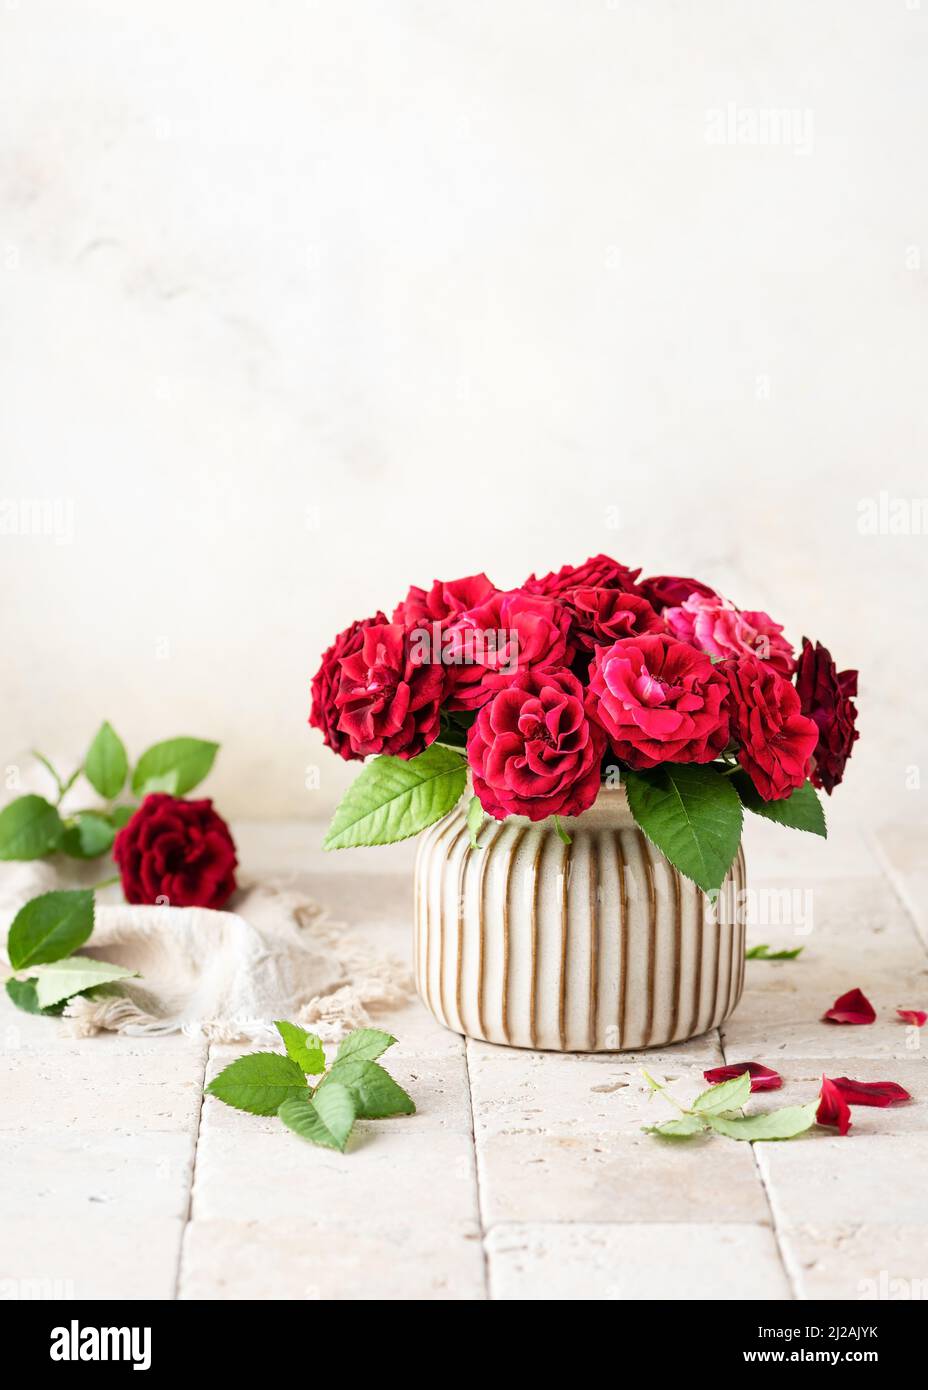 Hermoso ramo de rosas rojas oscuras de verano en jarrón de cerámica sobre fondo de mosaico de piedra clara. Concepto florístico o de decoración del hogar. Enfoque selectivo. Foto de stock